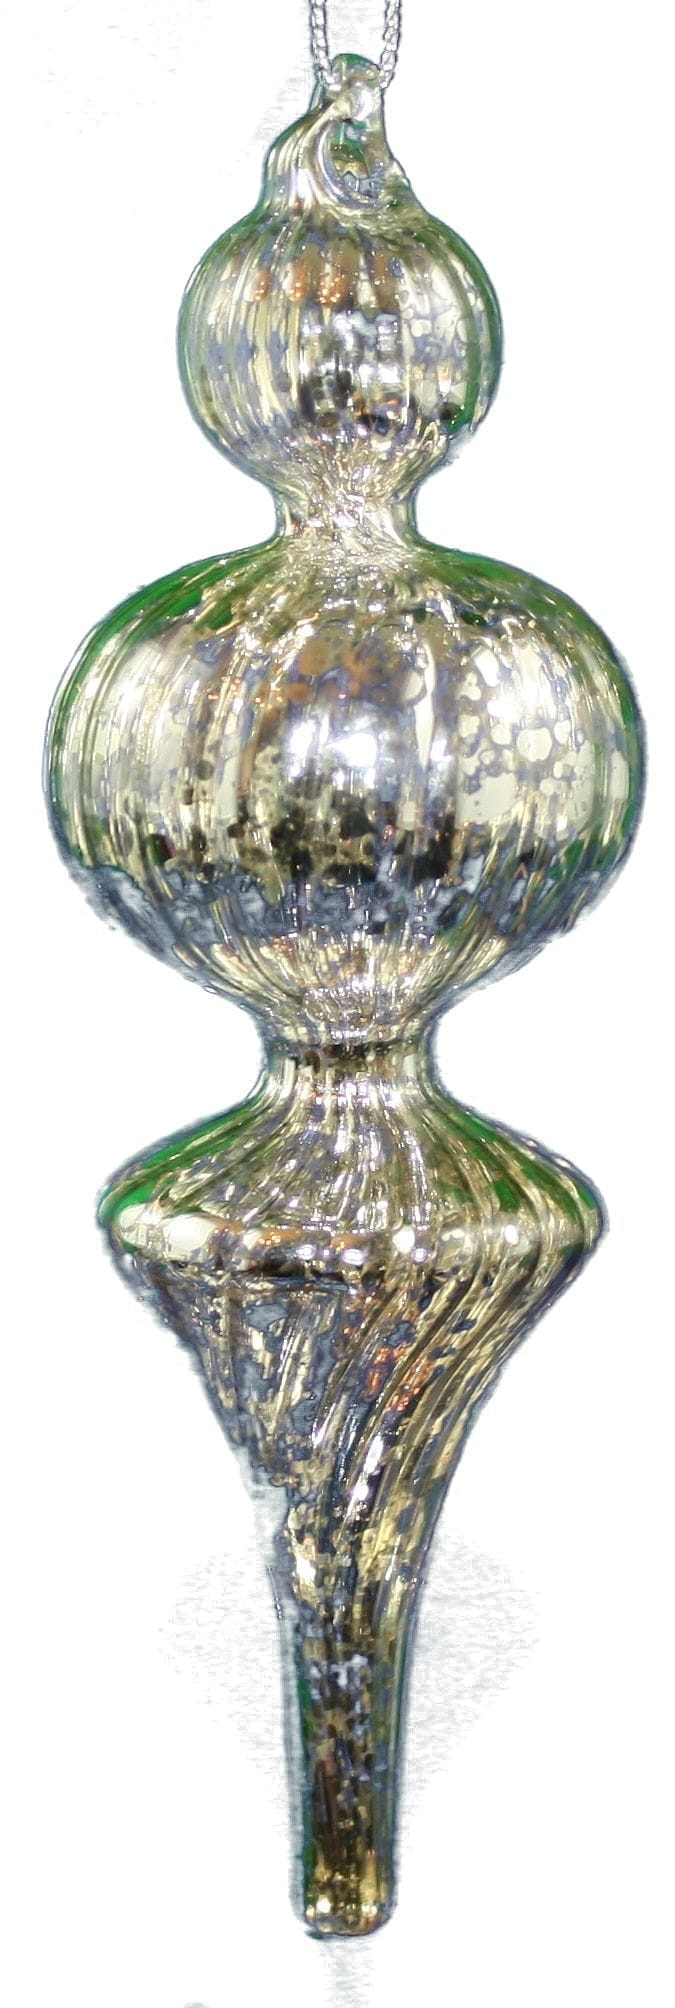 6? Mercury Glass Finial Ornament - Teardrop - Shelburne Country Store